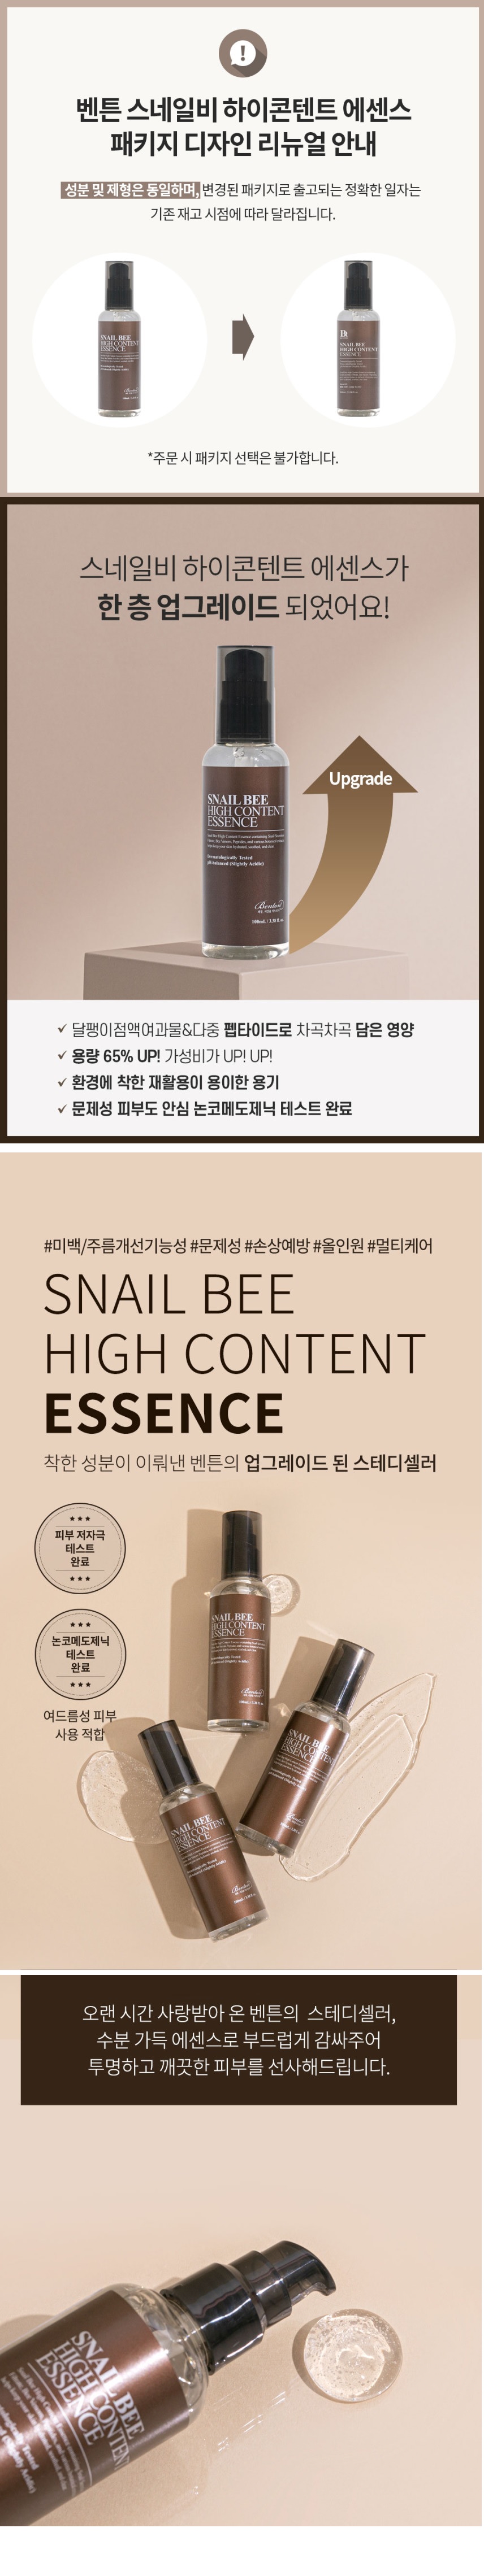 Benton Snail Bee High Content Essence korean skincare product online shop malaysia China romania1